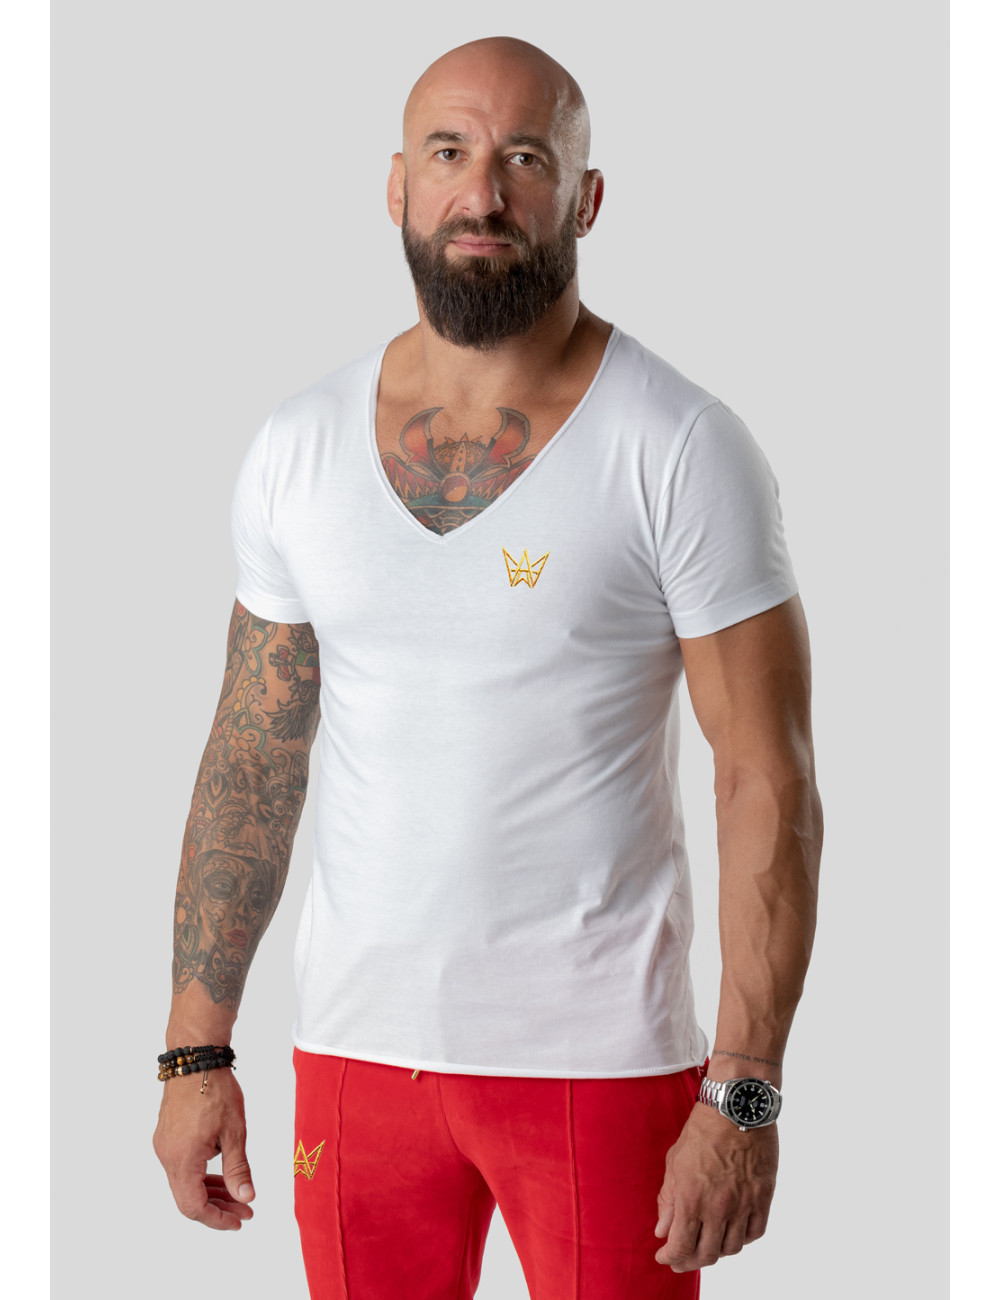 TRES AMIGOS WEAR tričko s oficiálním výstřihem Bílá XL